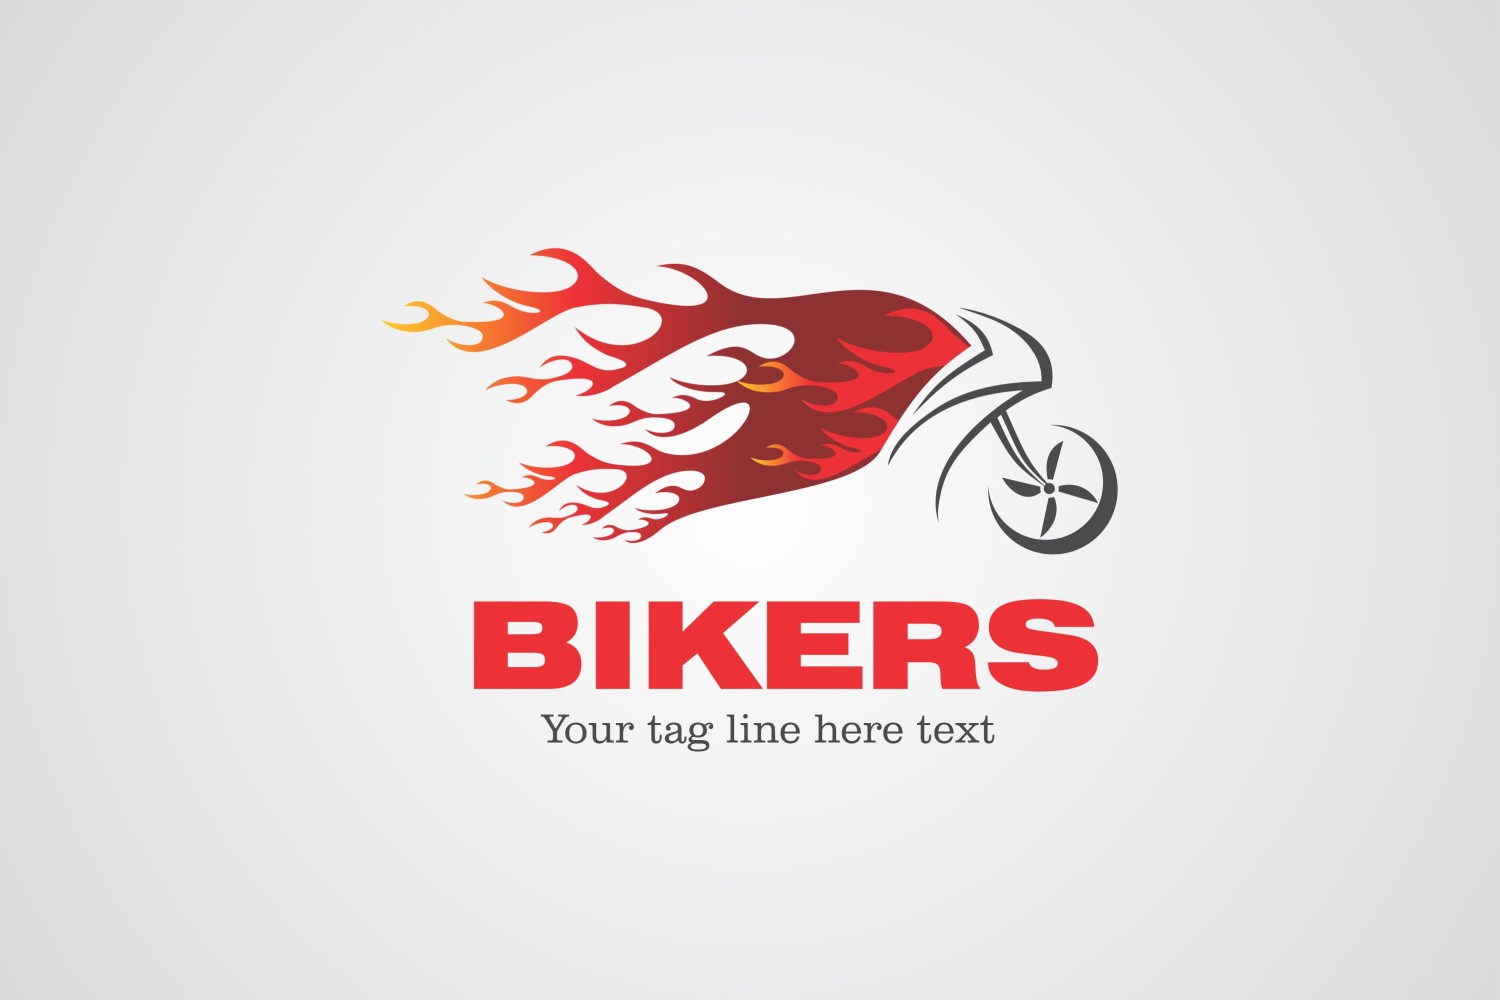 Bikers Corporate Logo Design Template